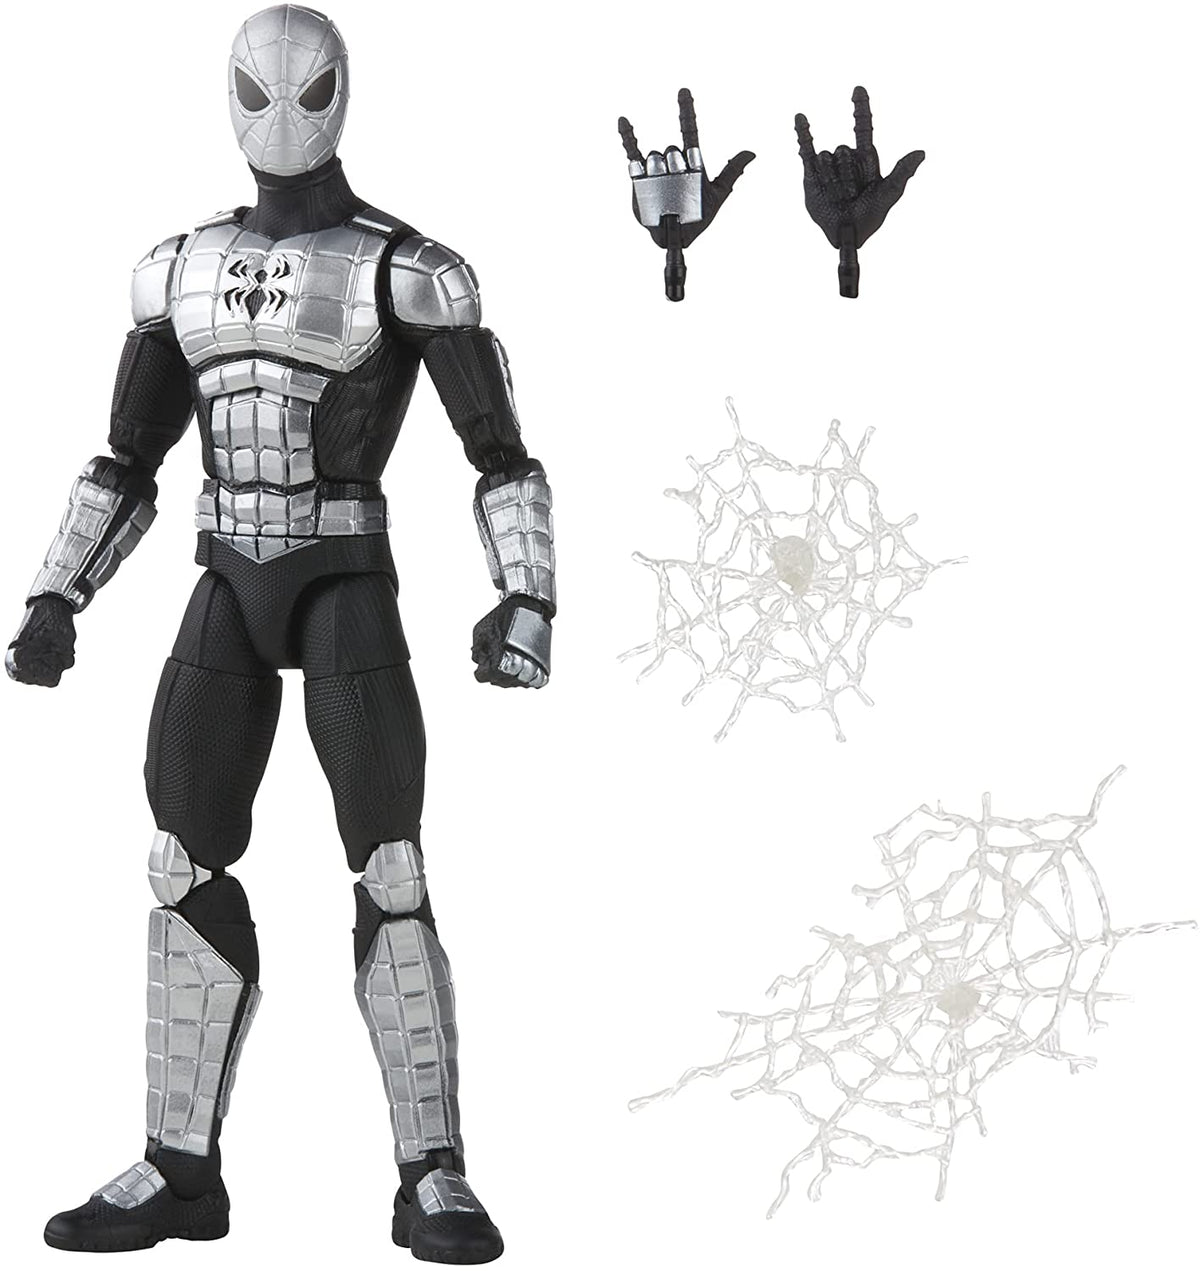 Hasbro Marvel Legends Series - Spider Armor MK I